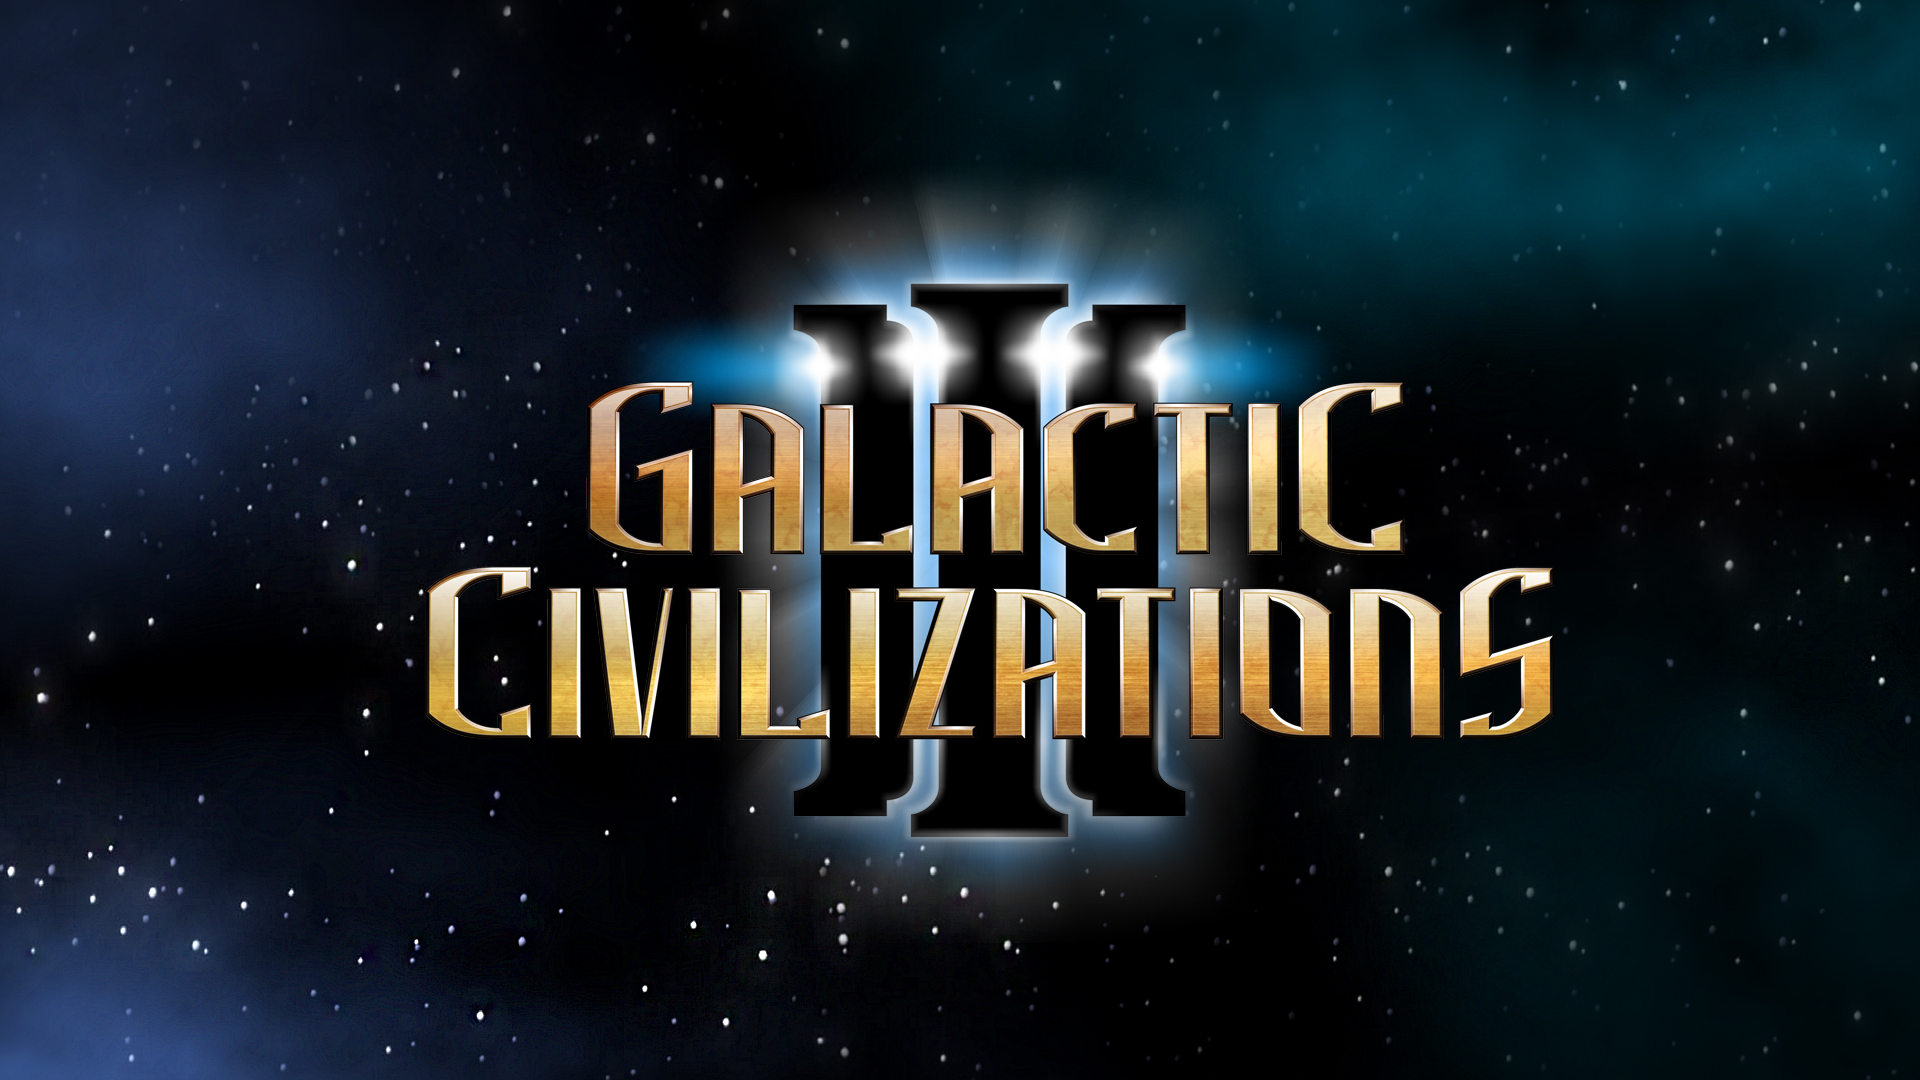 Galactic Civilizations III Backgrounds on Wallpapers Vista